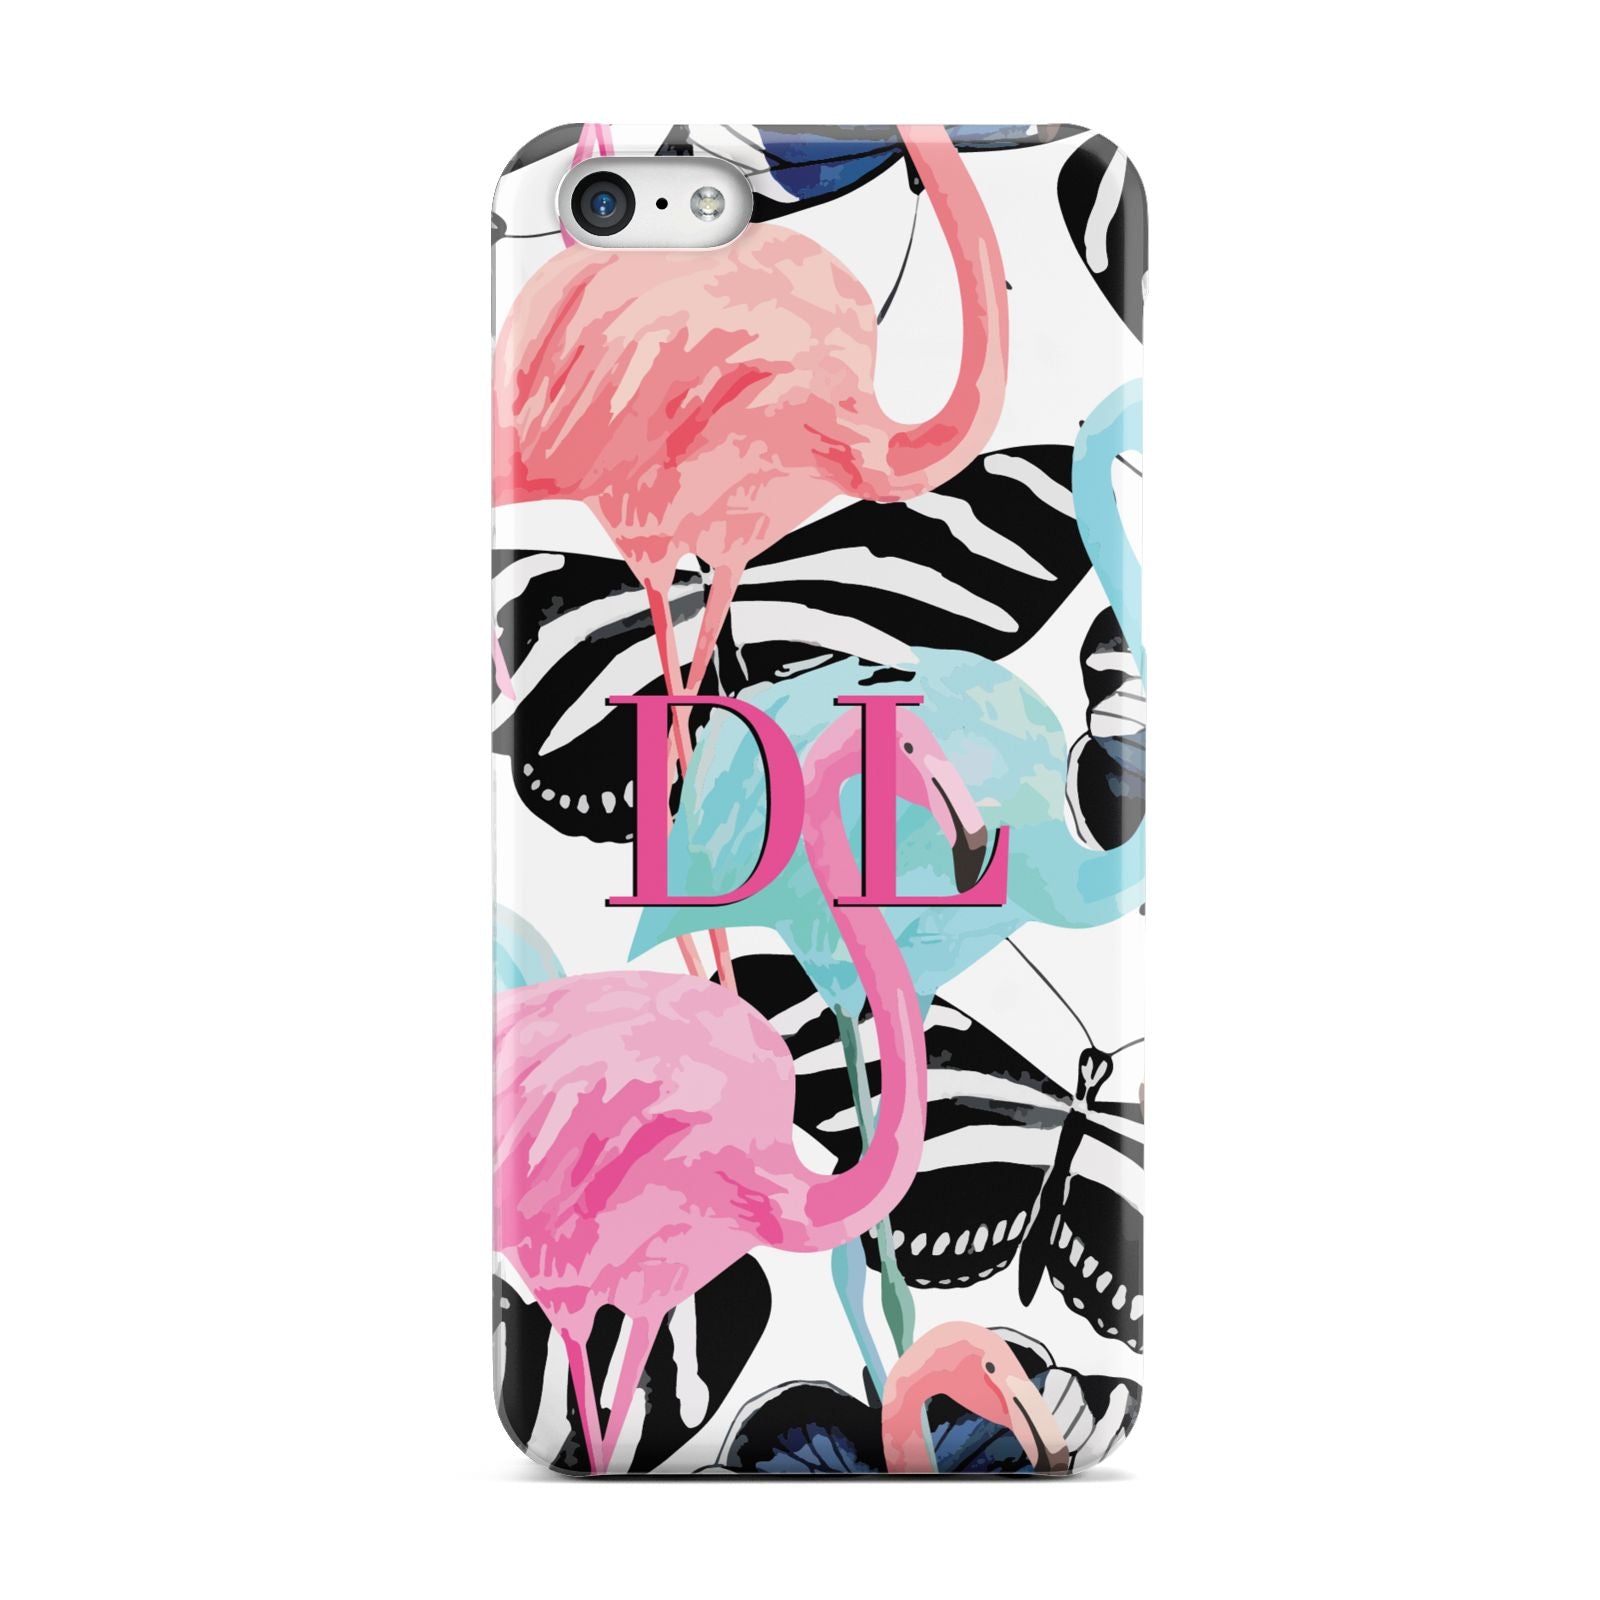 Butterflies Flamingos Apple iPhone 5c Case